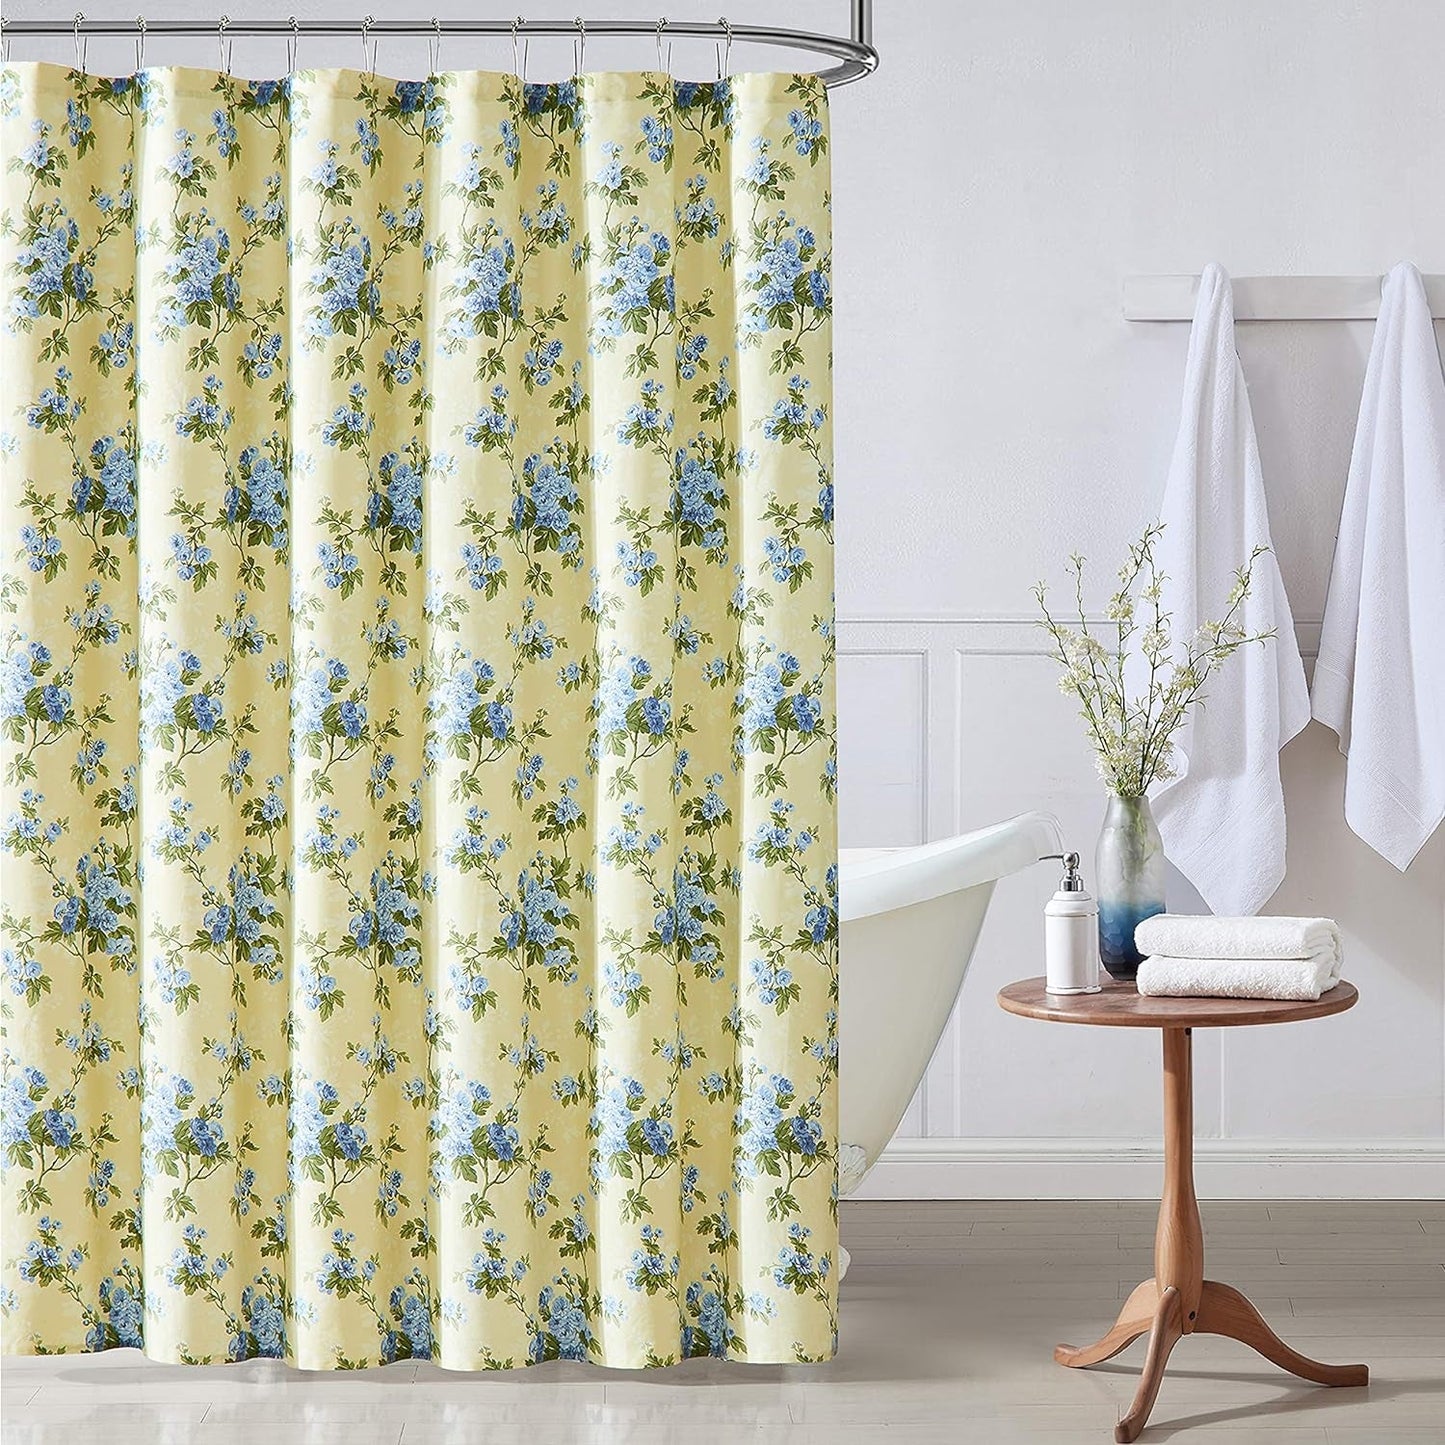 Laura Ashley Home - Shower Curtain, Stylish Cotton Bathroom Decor, Elegant Floral Home Decor (Elise Blue, 72" X 72")